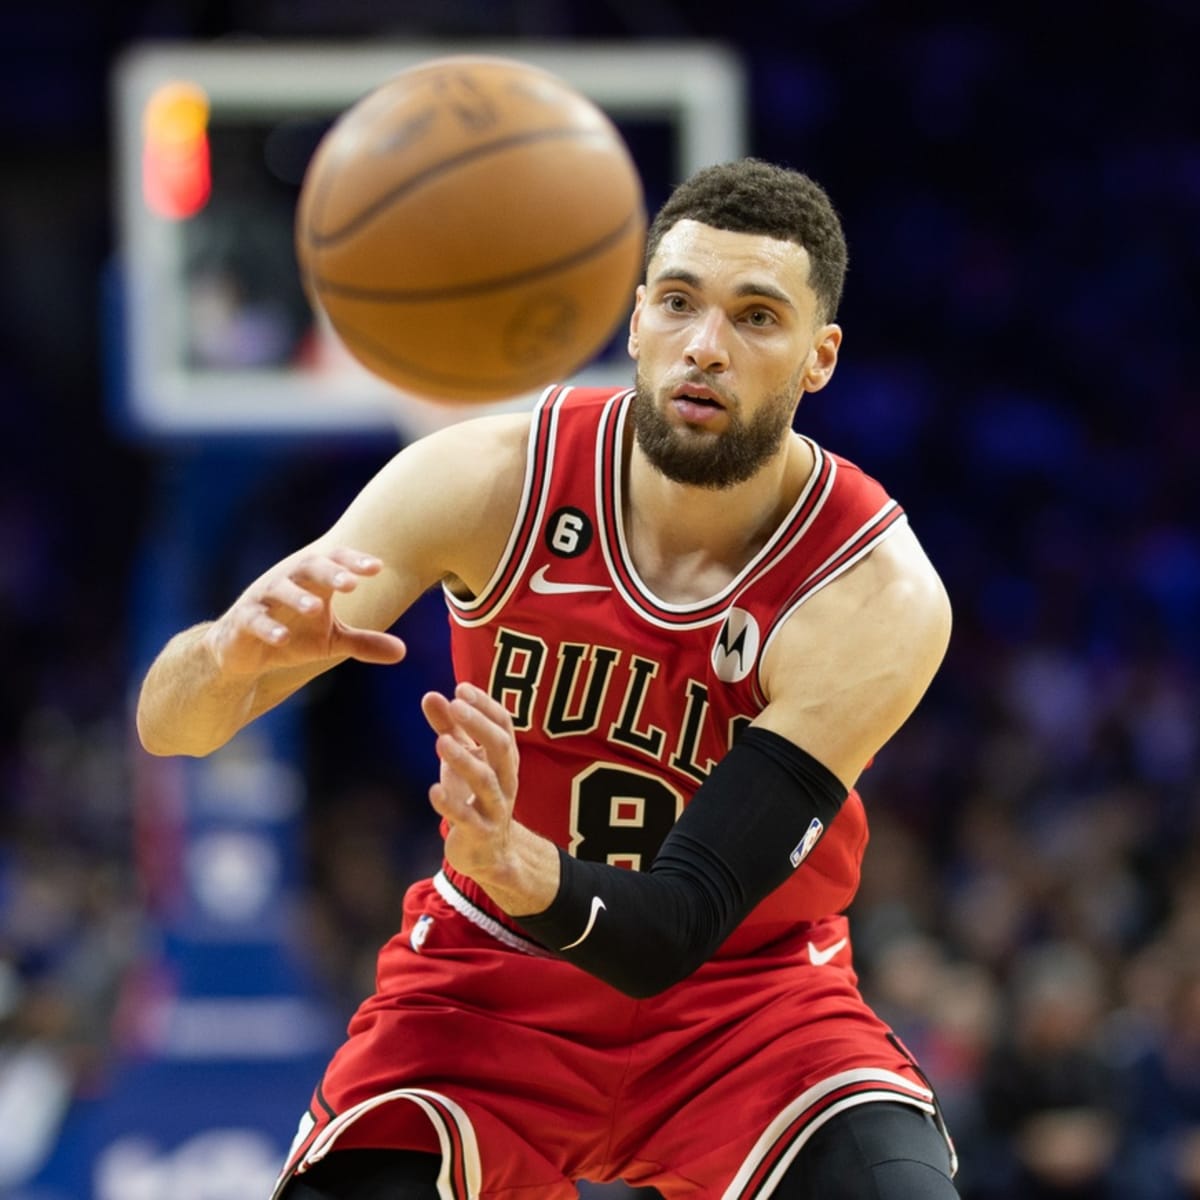 Chicago Bulls' Lonzo Ball: 'I definitely plan on playing again' - NBC Sports